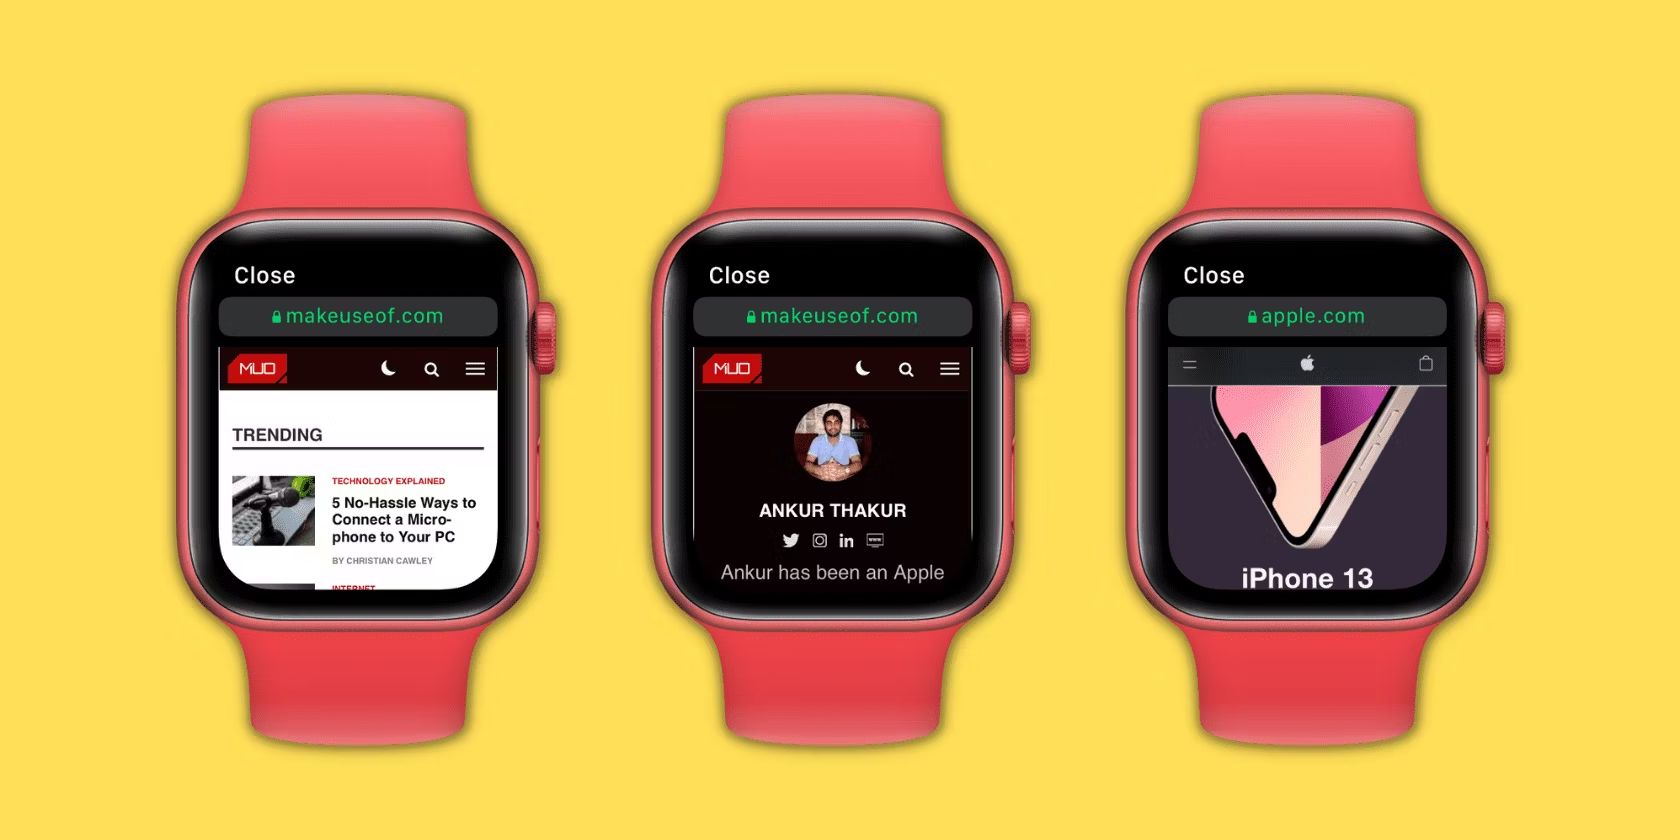 How To Add Safari To Apple Watch